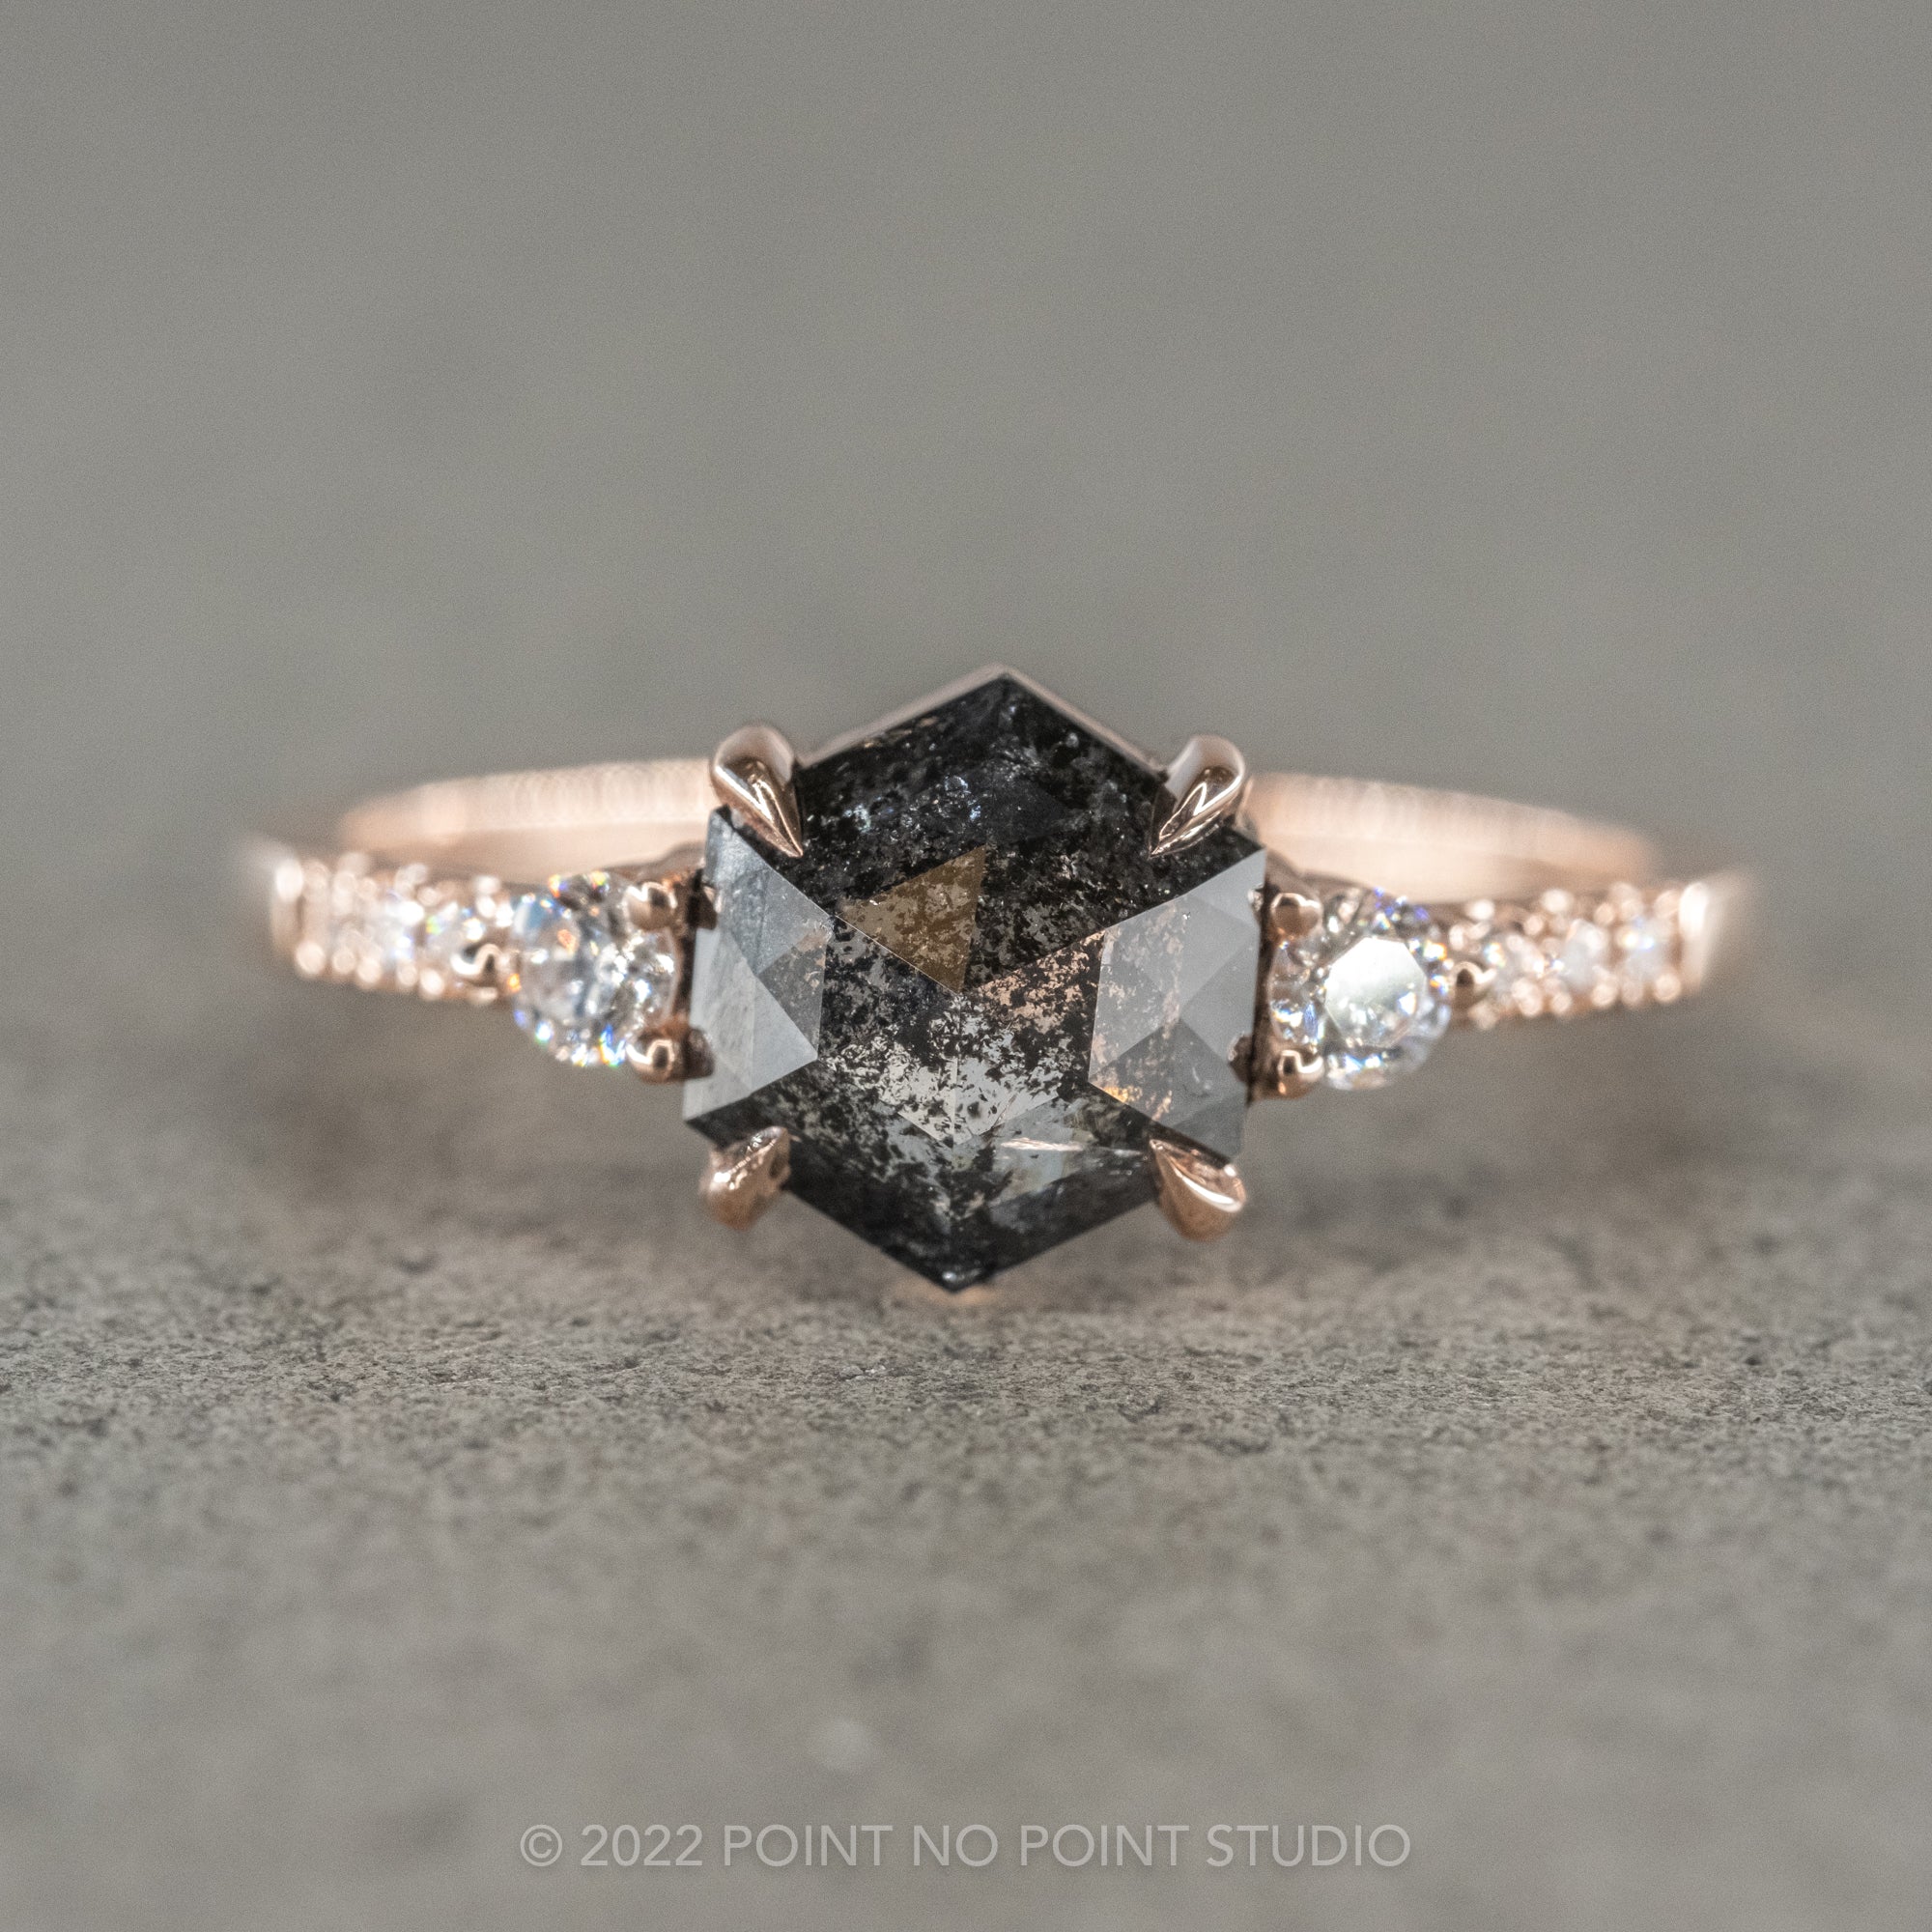 Gemone Diamonds White Gold Princess Cut Black Diamond Wedding Ring for  Men's at Rs 55000 in Surat